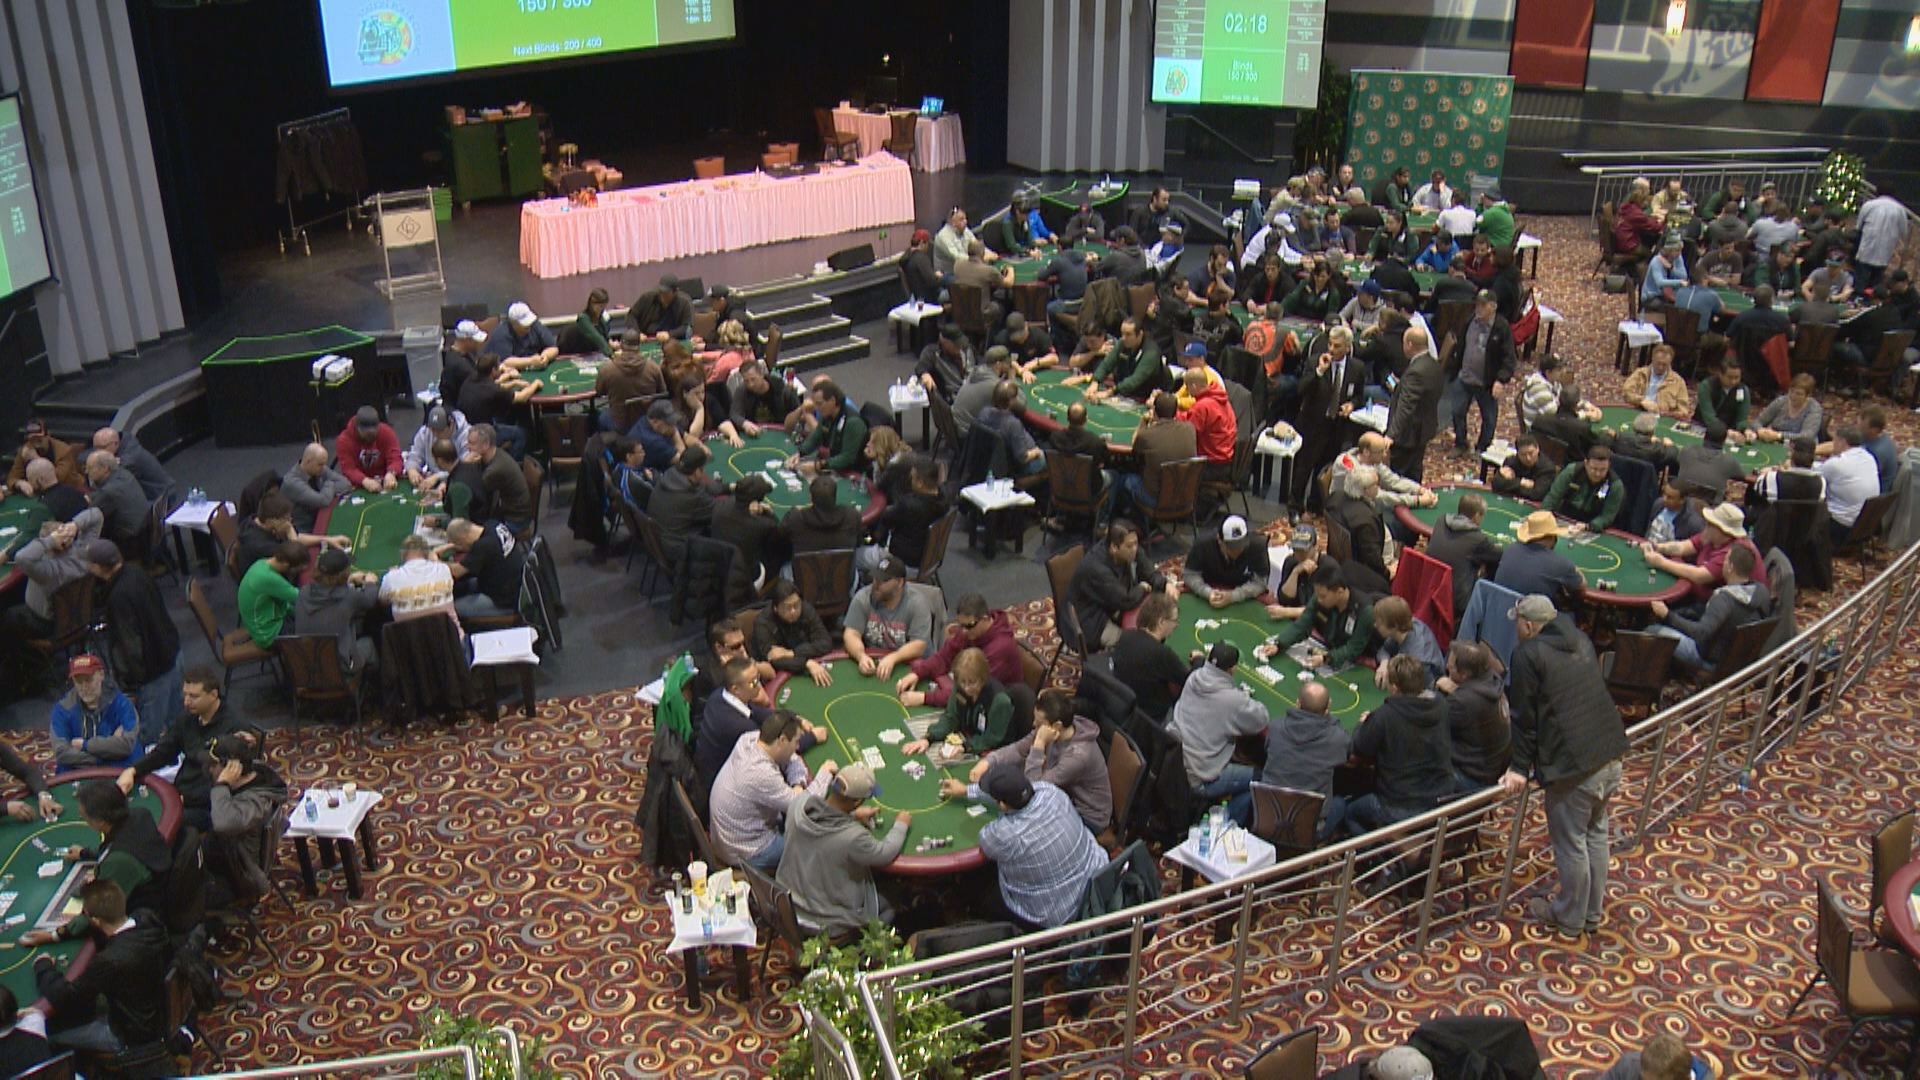 downstream casino poker tournaments